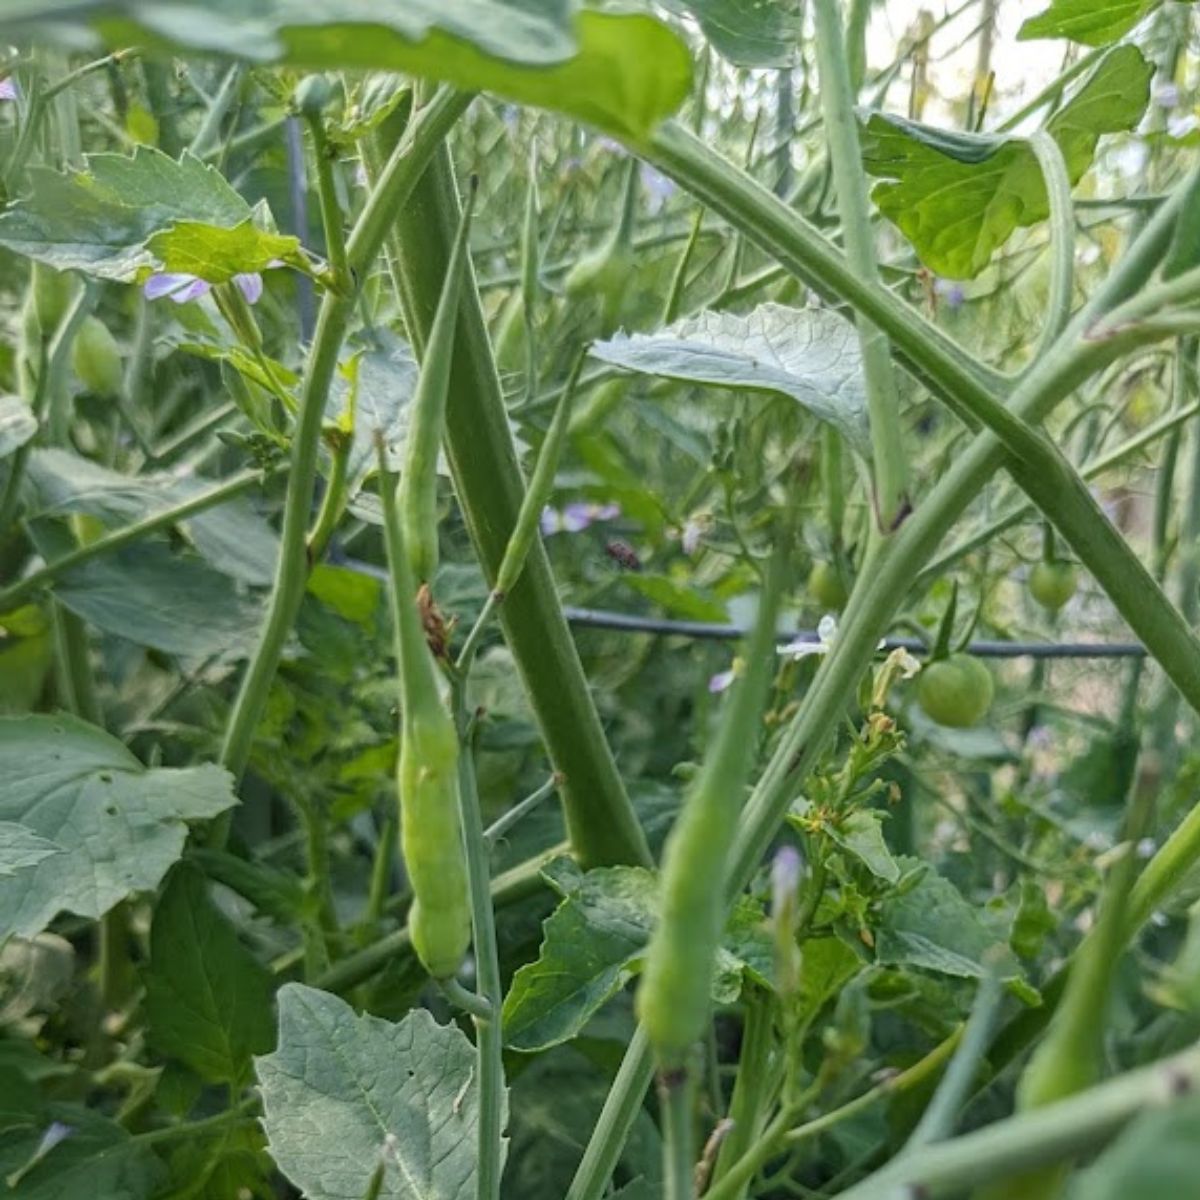 radish pods ready to harvest